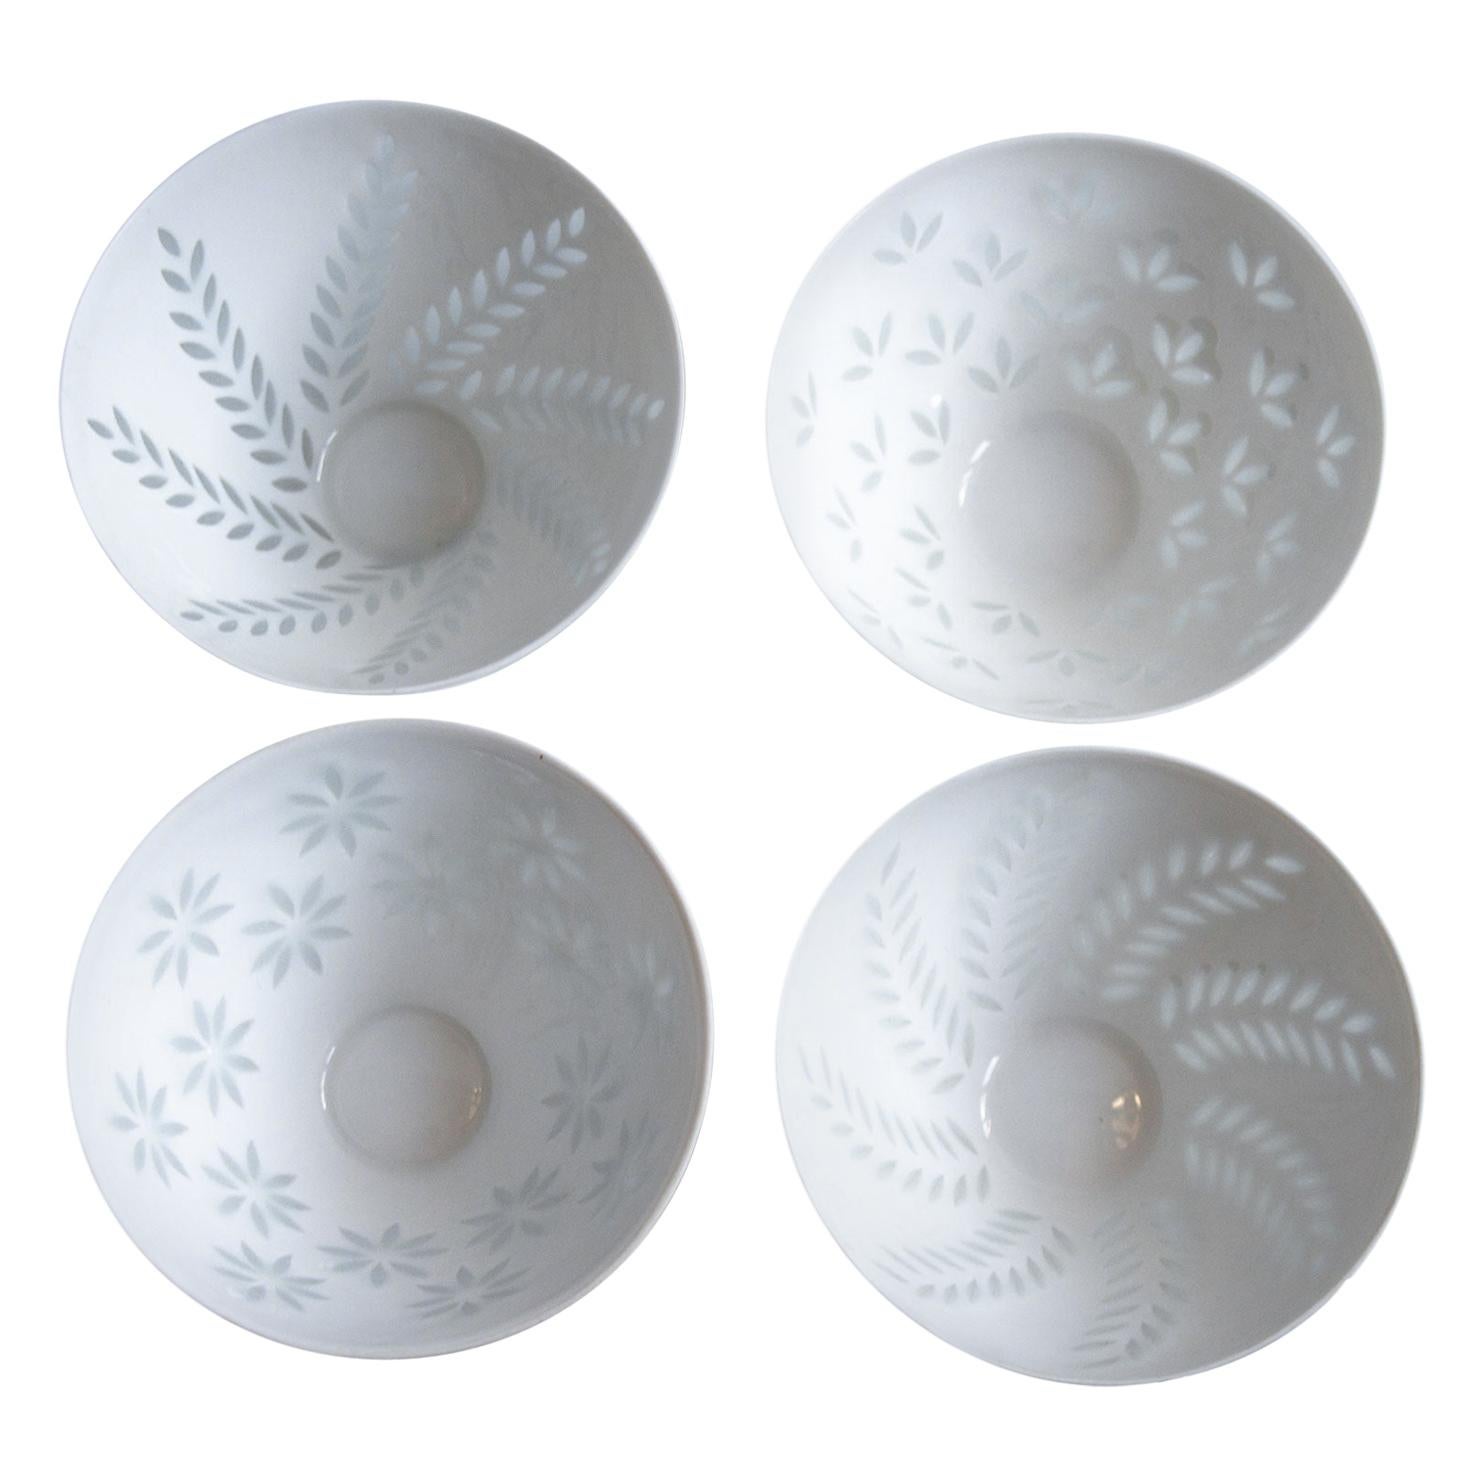 Six pieces of Scandinavian modern rice grain porcelain bowls by Friedl Holzer-Kjellberg for Arabia in Finland.
A delicate 